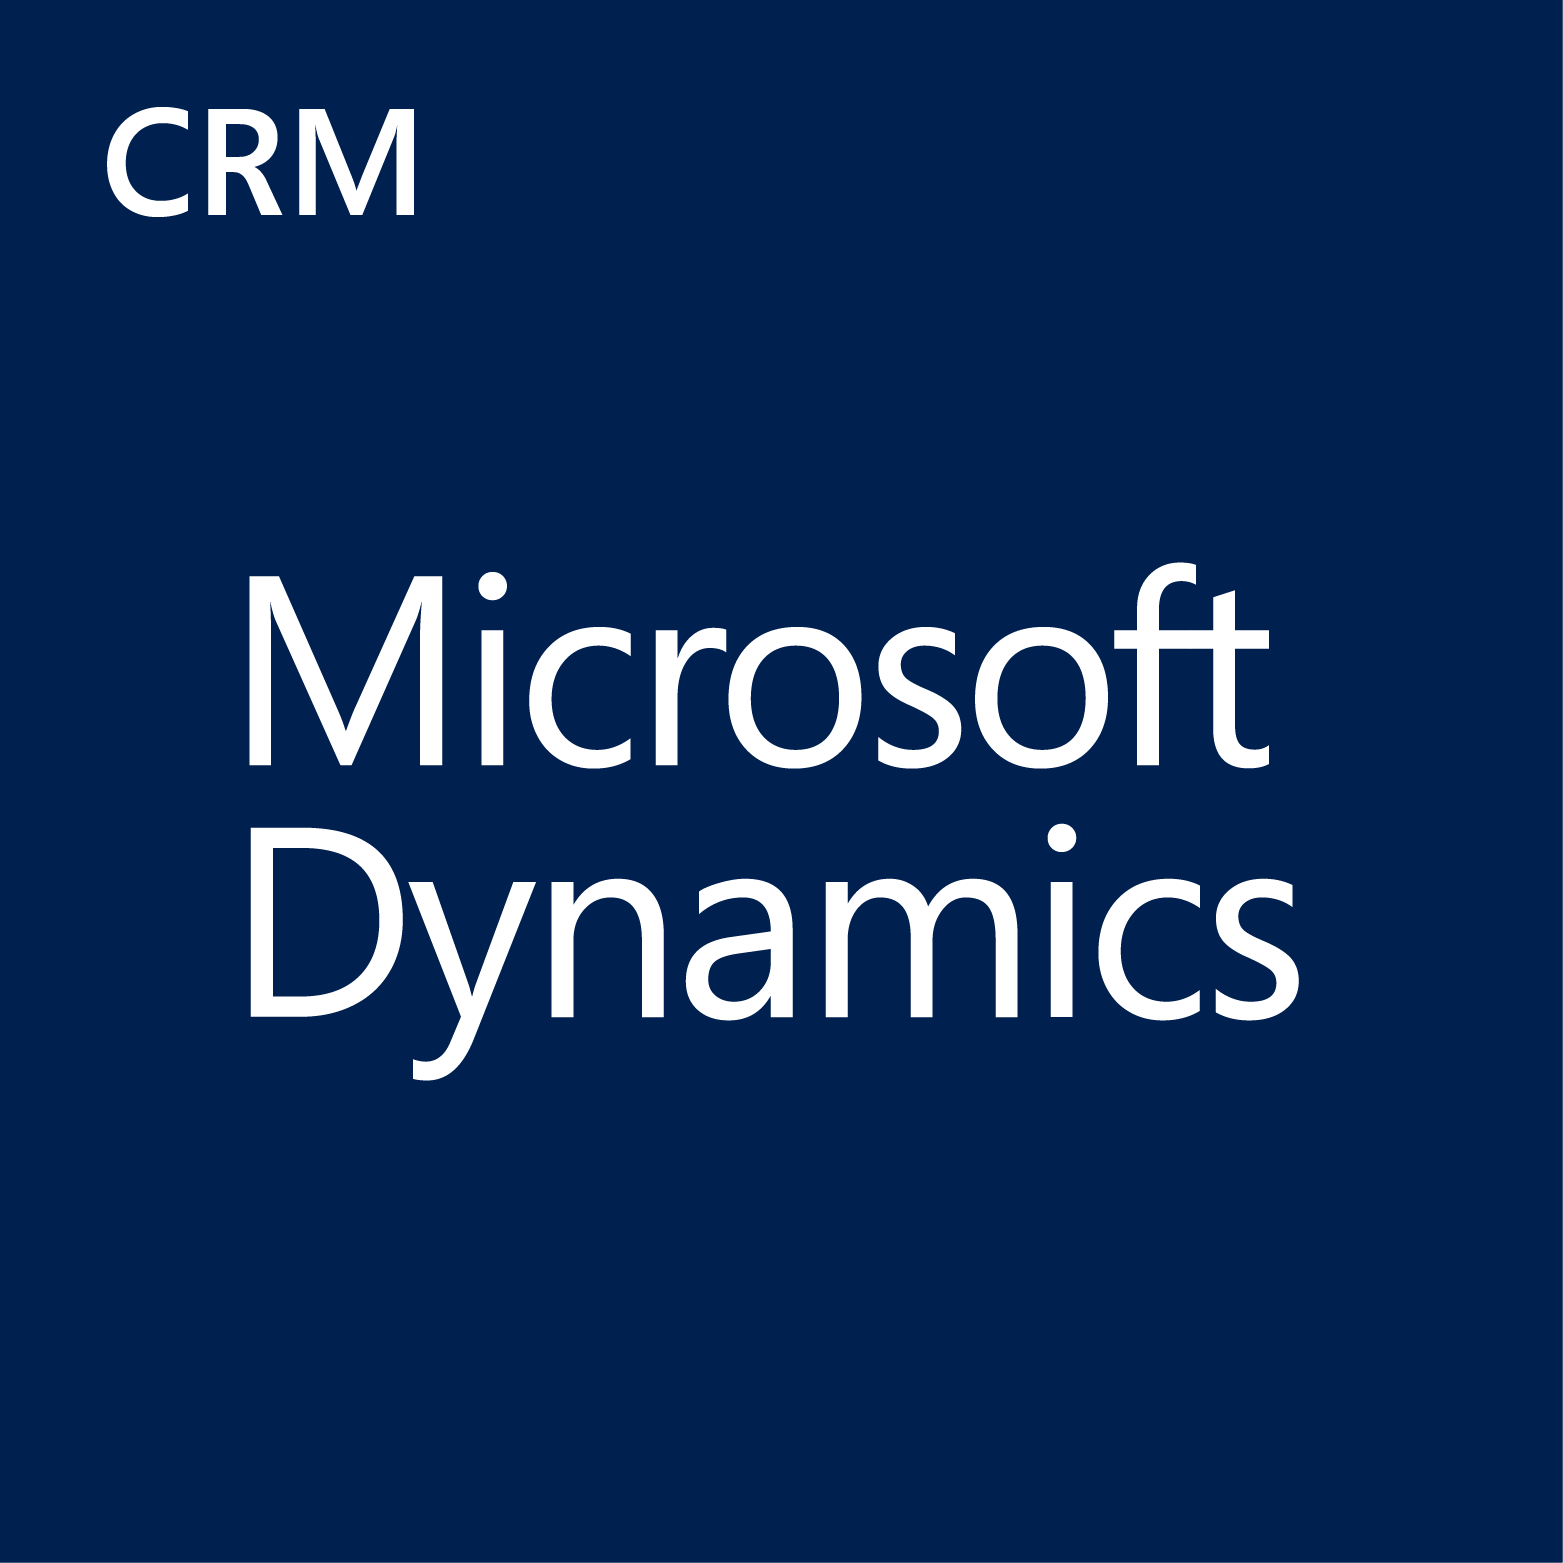 Azure Dynamics CRM Logo - Microsoft Dynamics CRM | Corporate Renaissance Group